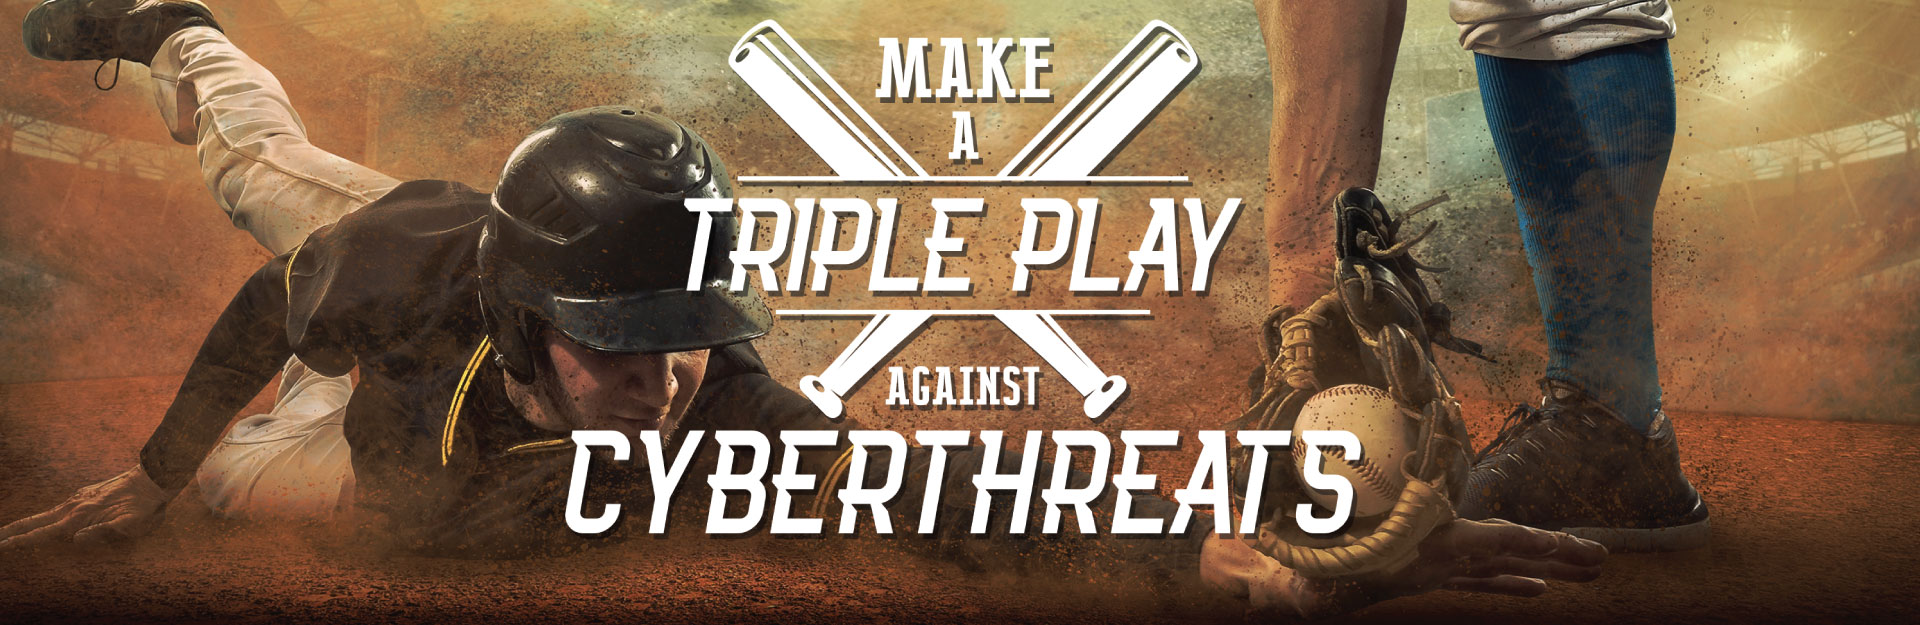 Make a Triple Play Against Cyberthreats